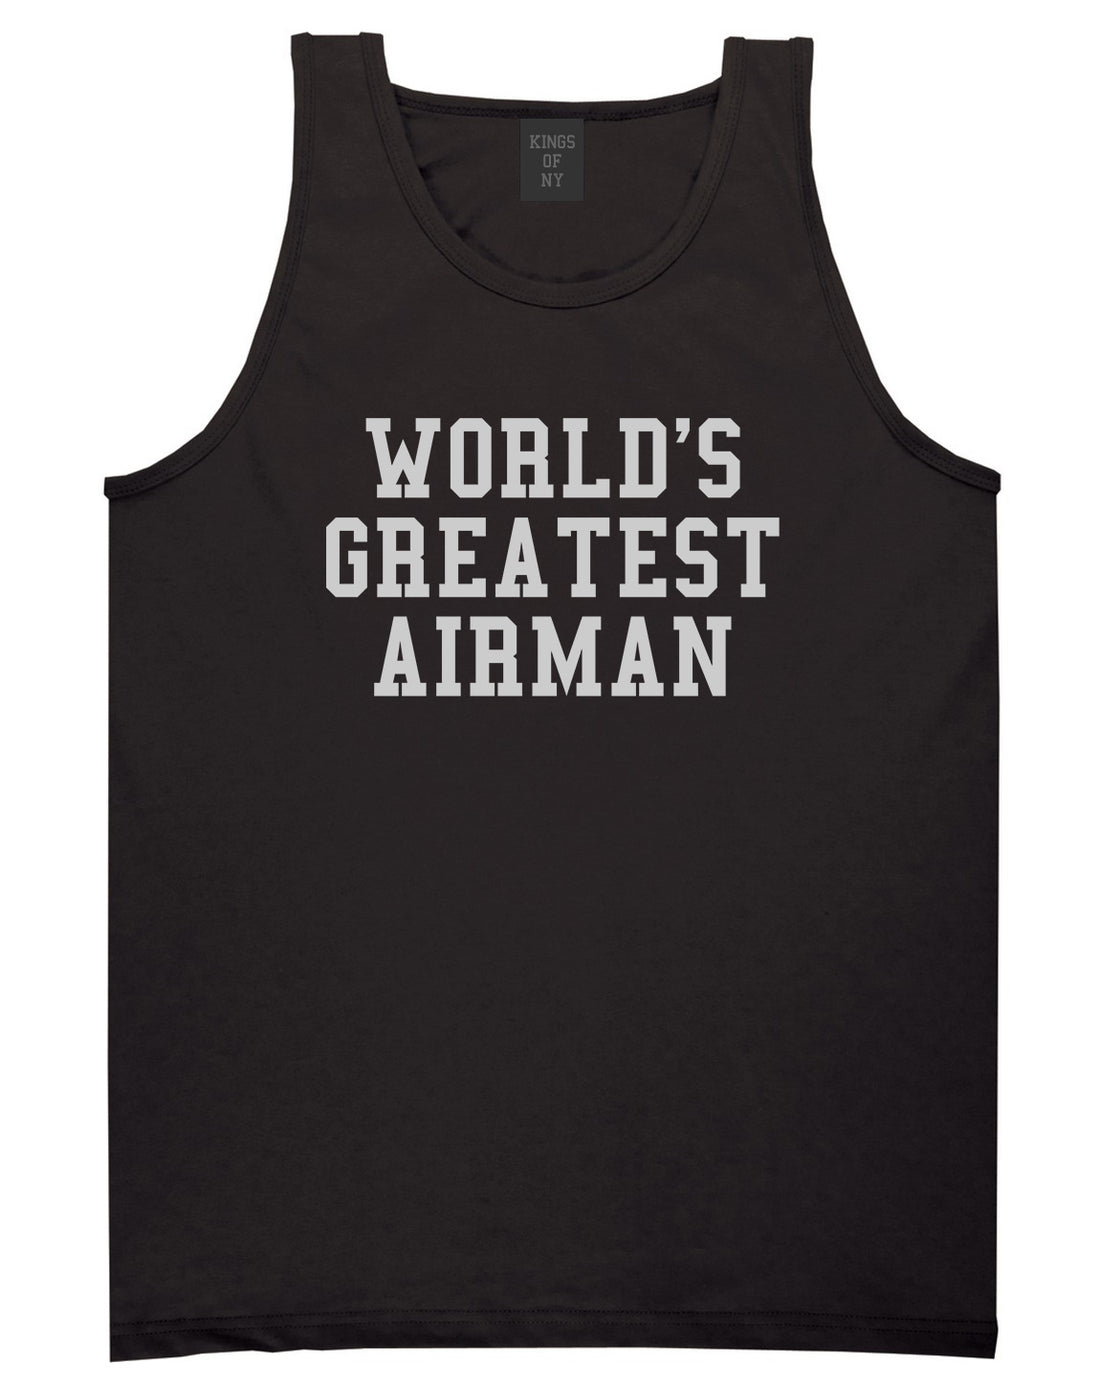 Worlds Greatest Airman Pilot Mens Tank Top T-Shirt Black